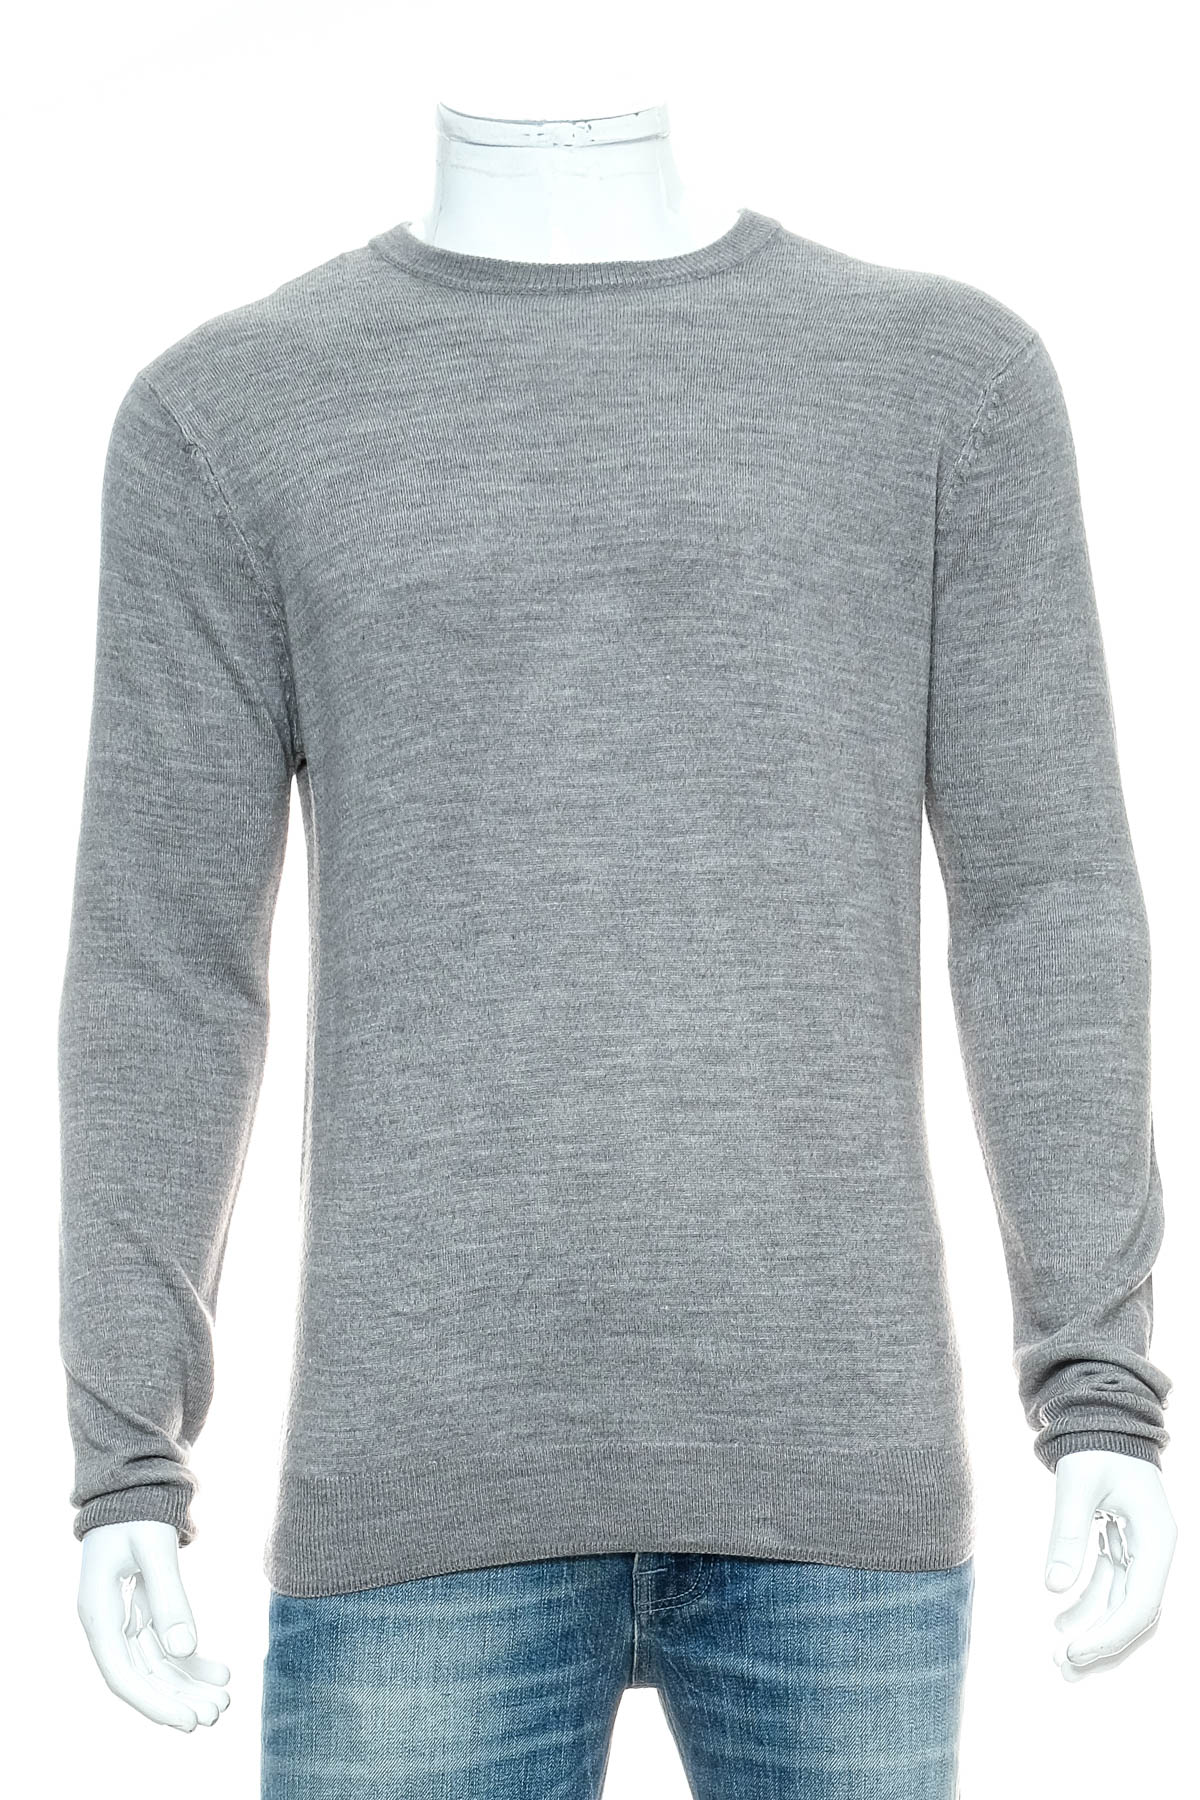 Men's sweater - PRIMARK - 0